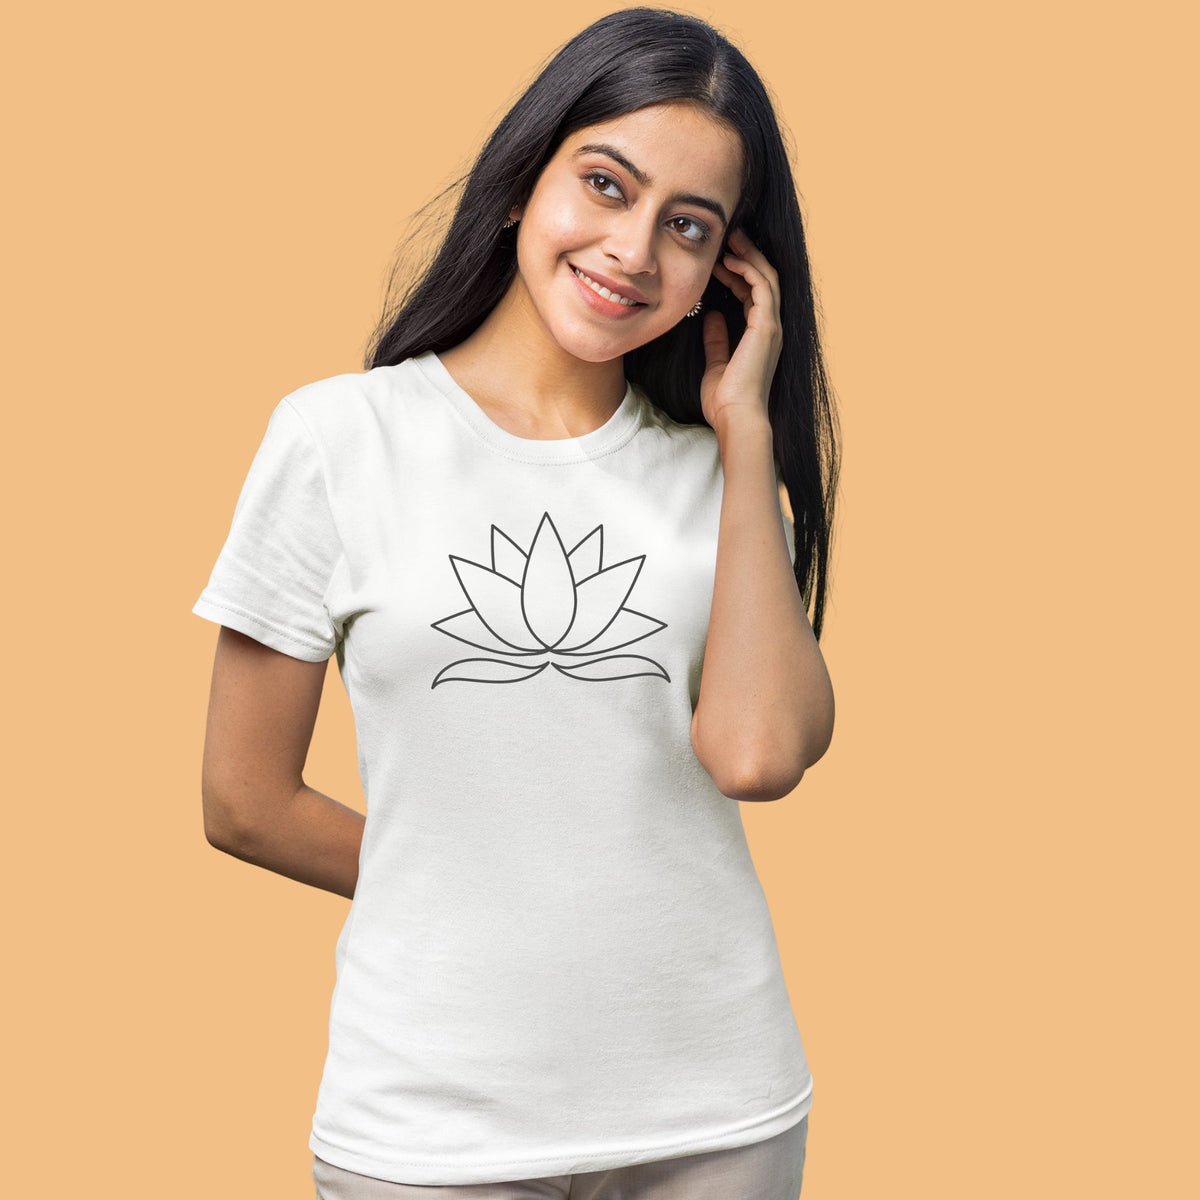 lotus-leaf-stroke-mind-body-spirit-yogic-t-shirt-s-meditation-yoga-love-white-women-printed-t-shirt